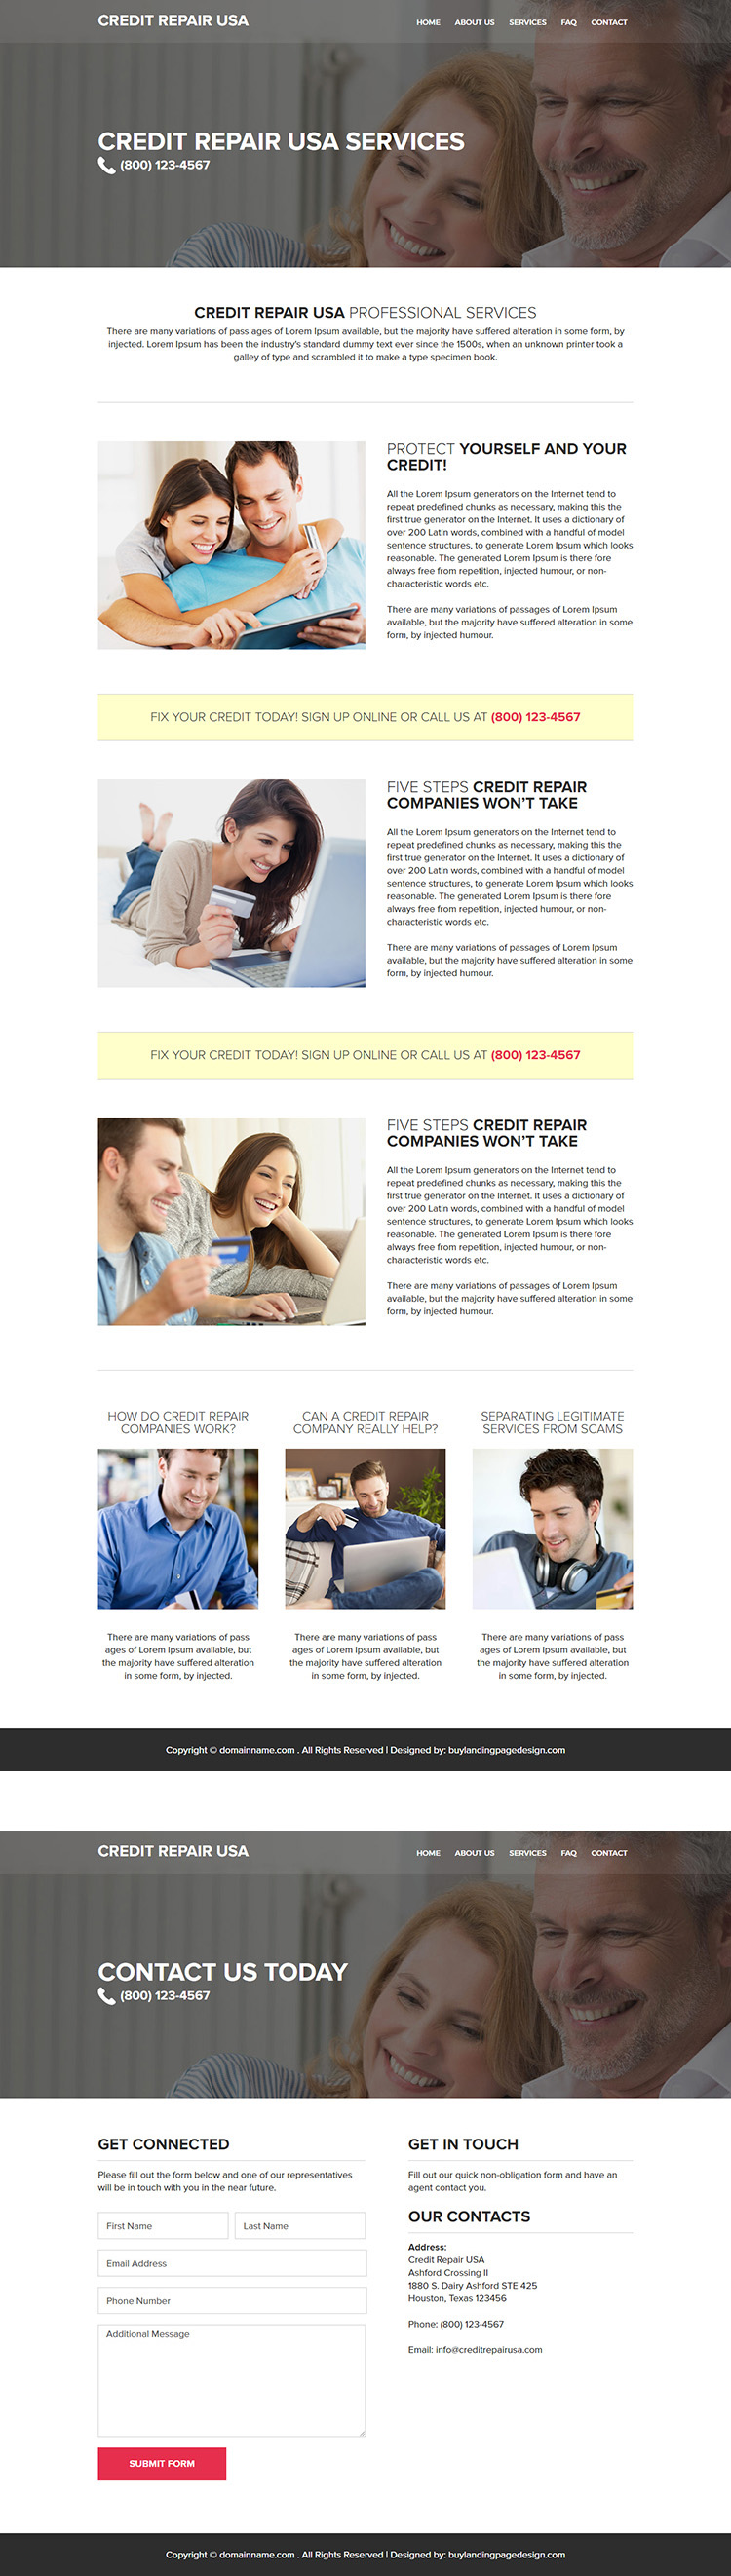 responsive credit repair lead capturing website design